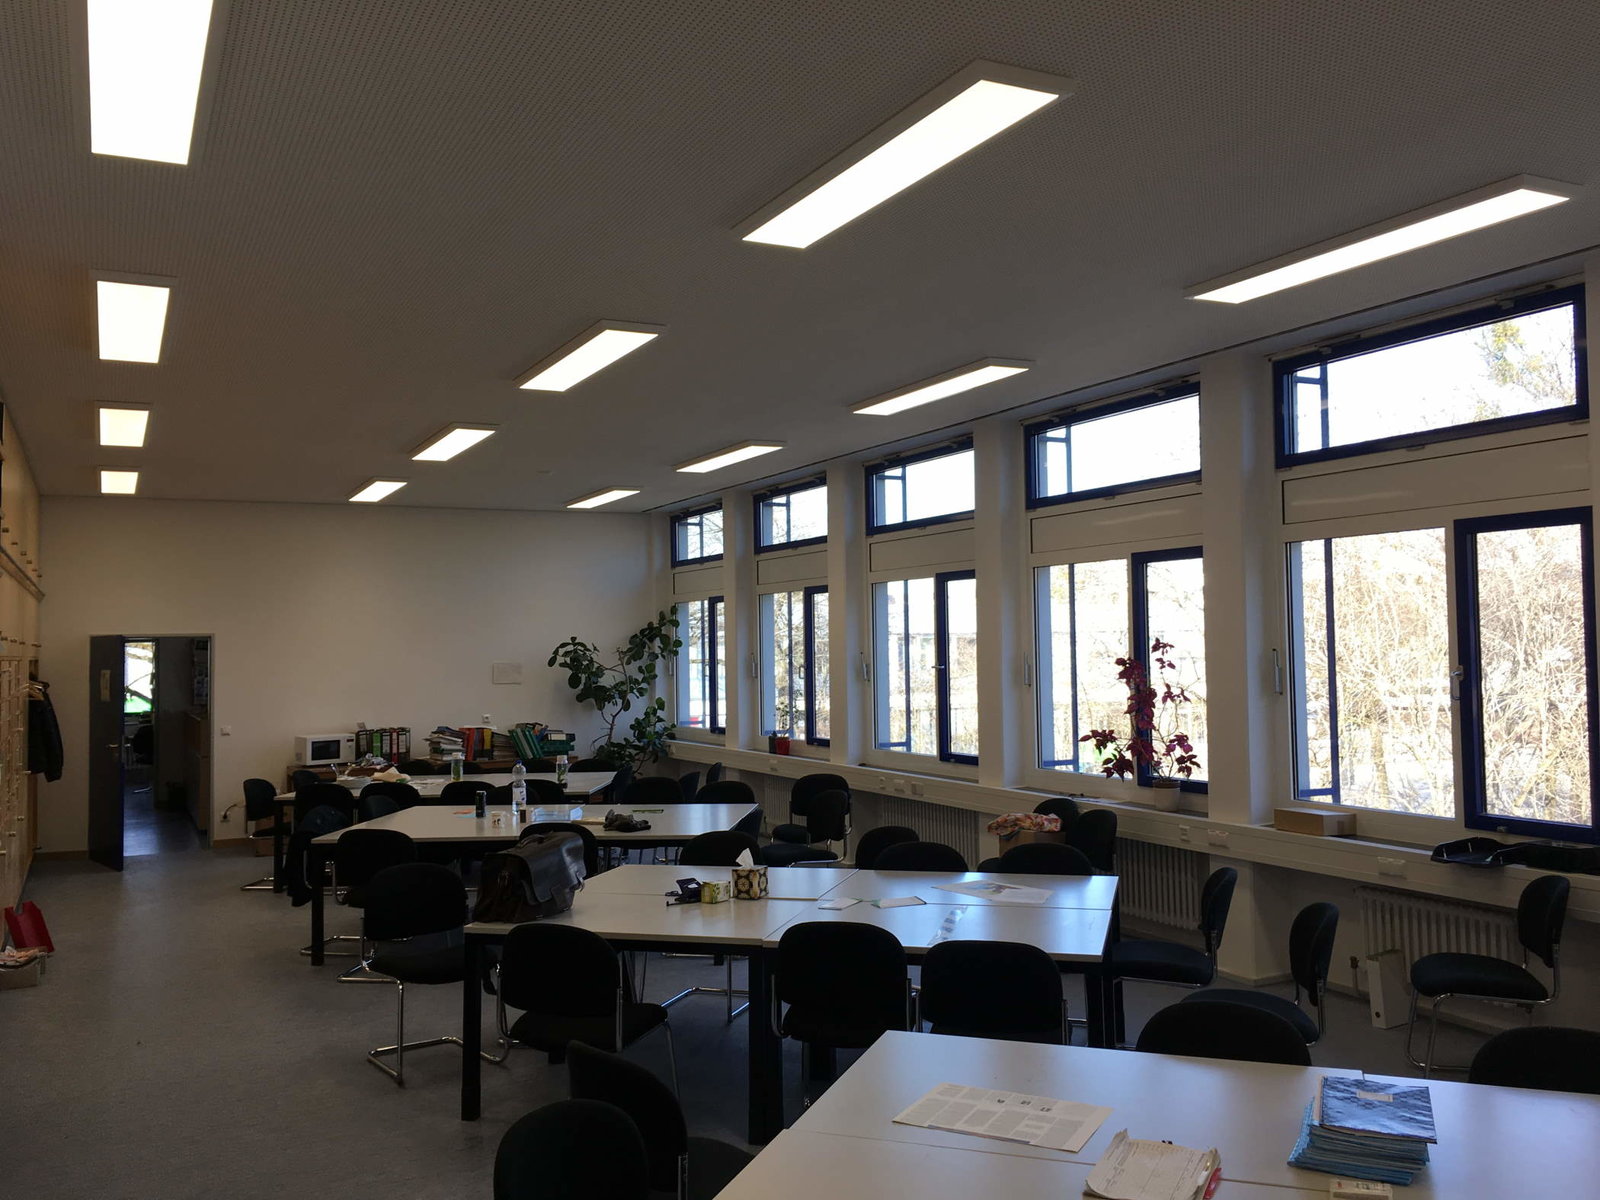 Klassenraum der Mittelschule Wiesentfelser Str. 53